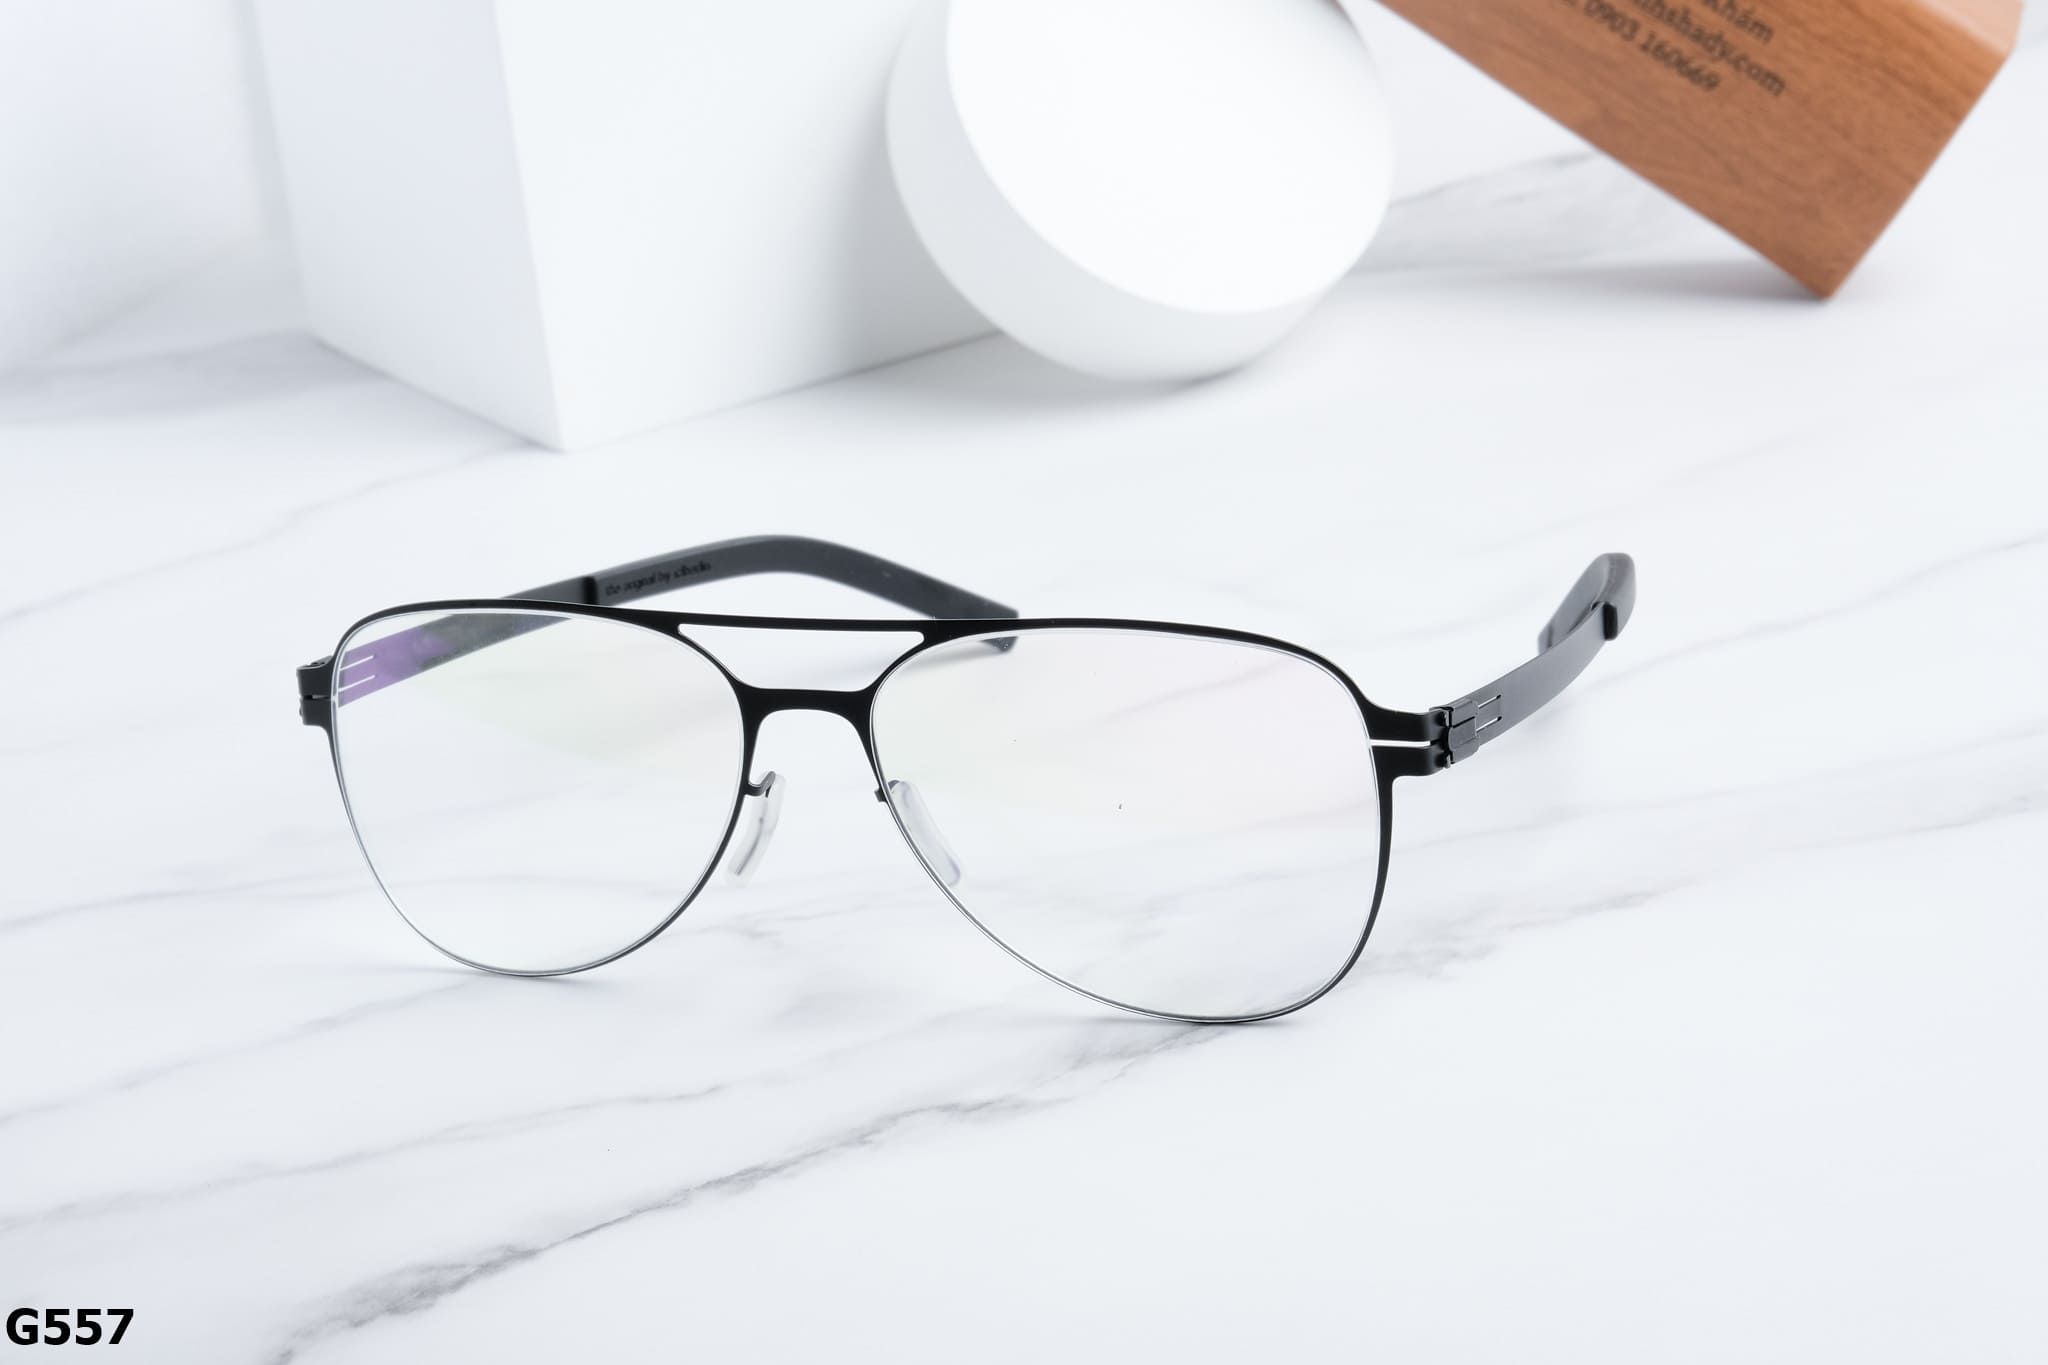  IC Eyewear - Glasses - G557 